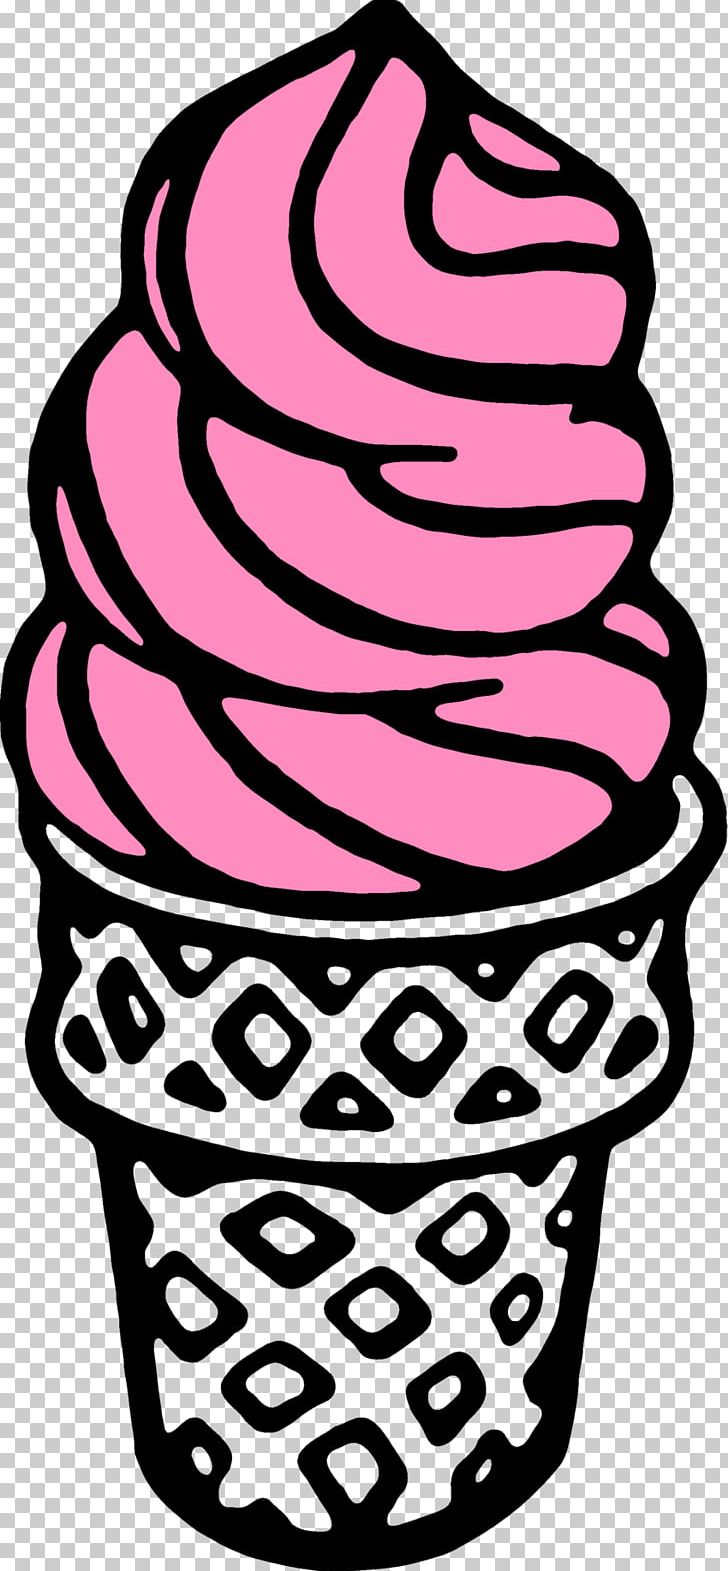 Ice Cream Cones Soft Serve Frozen Yogurt PNG, Clipart, Artwork, Barquilla, Cream, Dessert, Drawing Free PNG Download